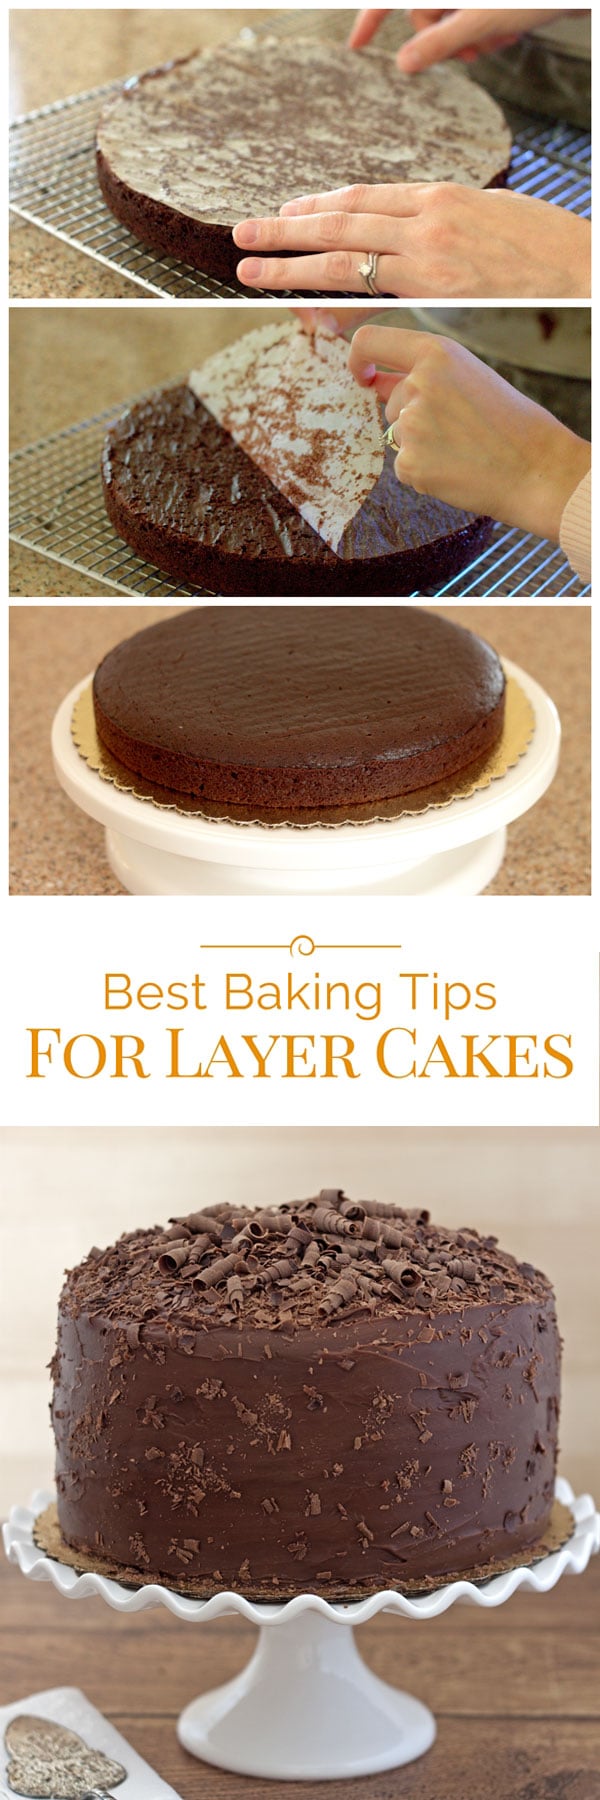 Baking Tips for Layer Cakes - Barbara Bakes